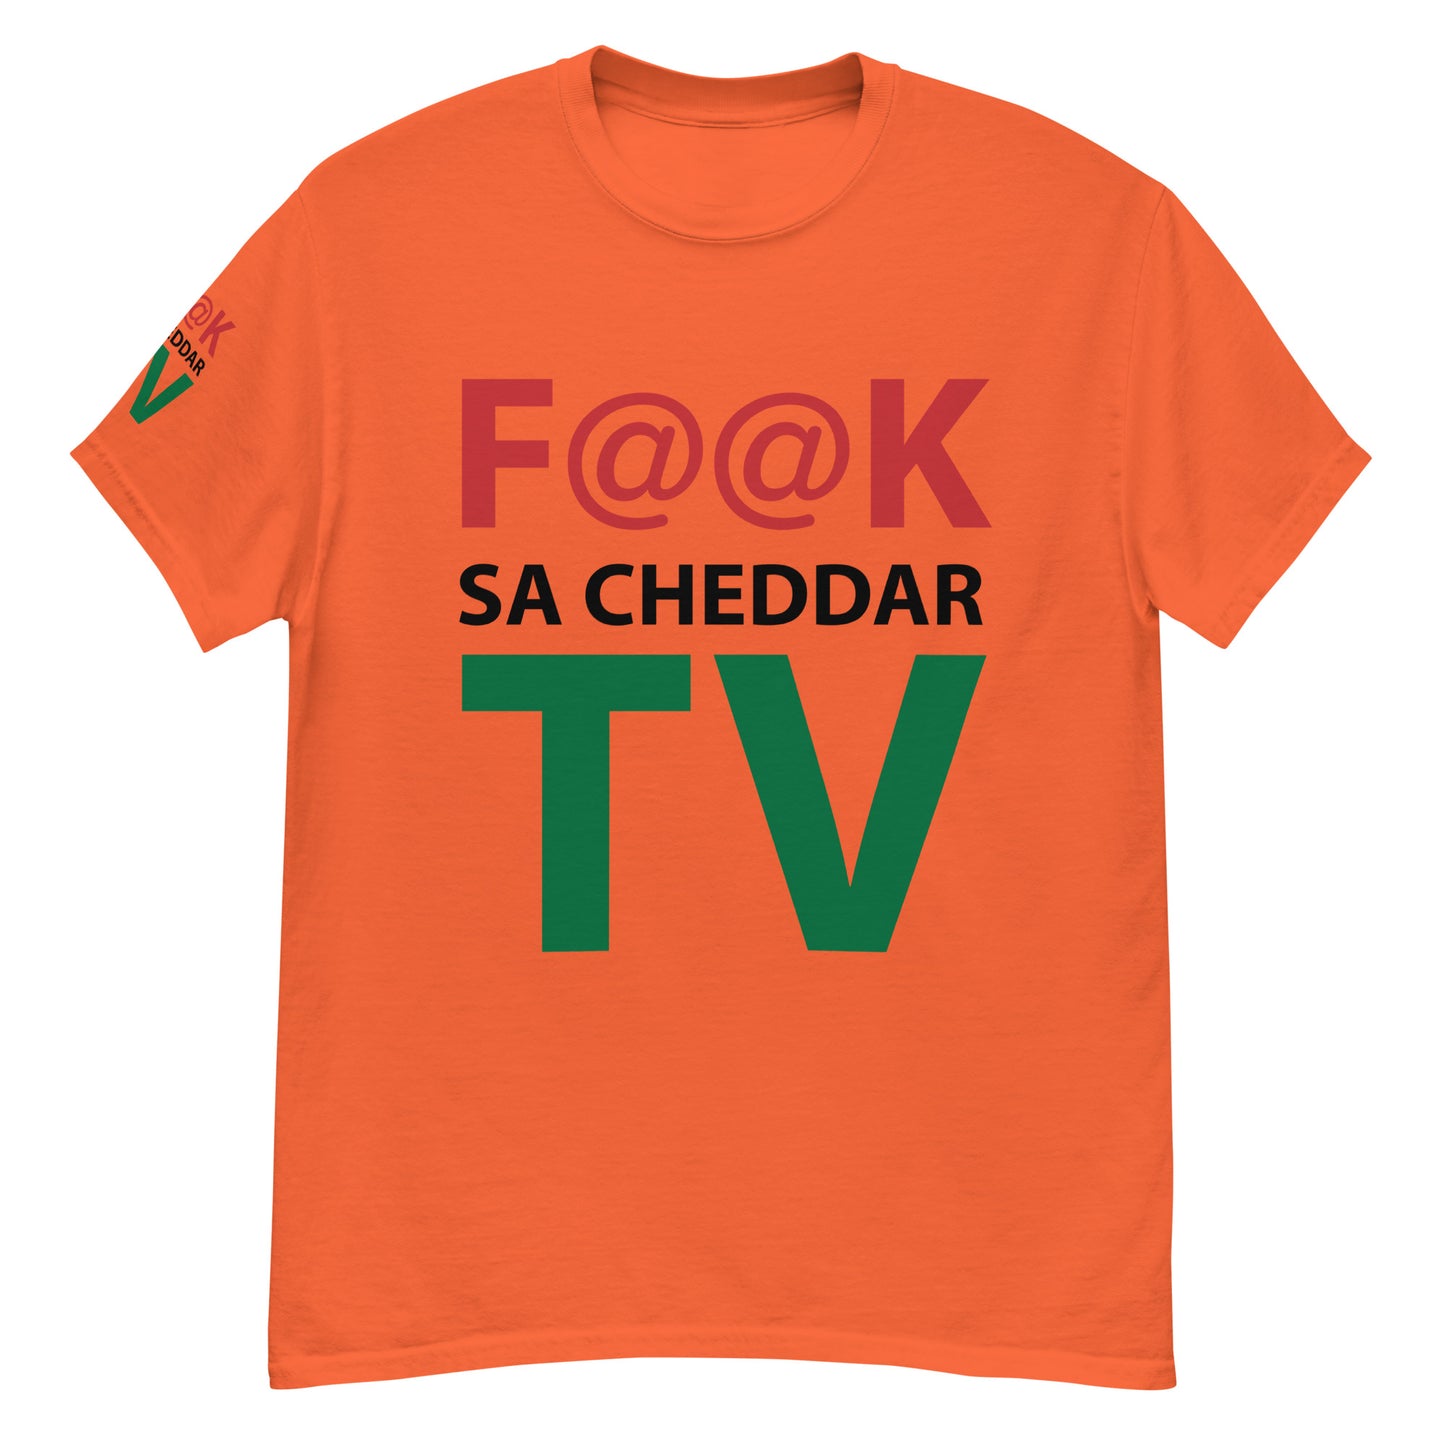 F@@K SA.CHEDDAR TV Men's classic tee